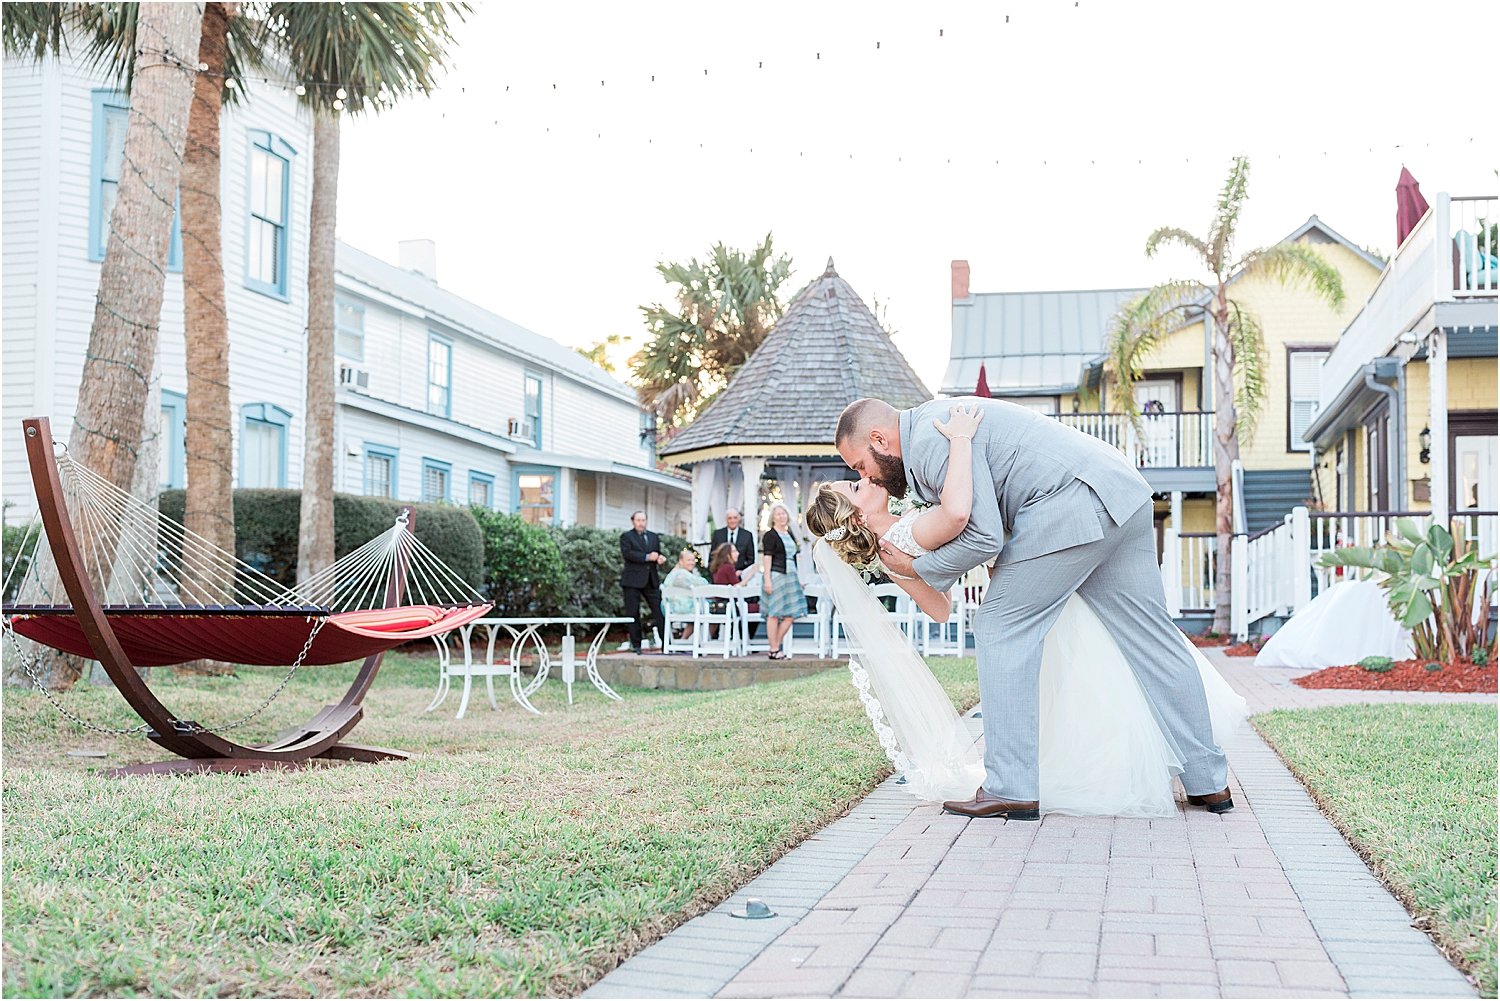 Kasey and Tyler's Wedding at Bayfront Marin St. Augustine, Florida- Jacksonville, Ponte Vedra Beach, St. Augustine, Amelia Island, Florida and Destination Fine Art Film Wedding Photography_0018.jpg